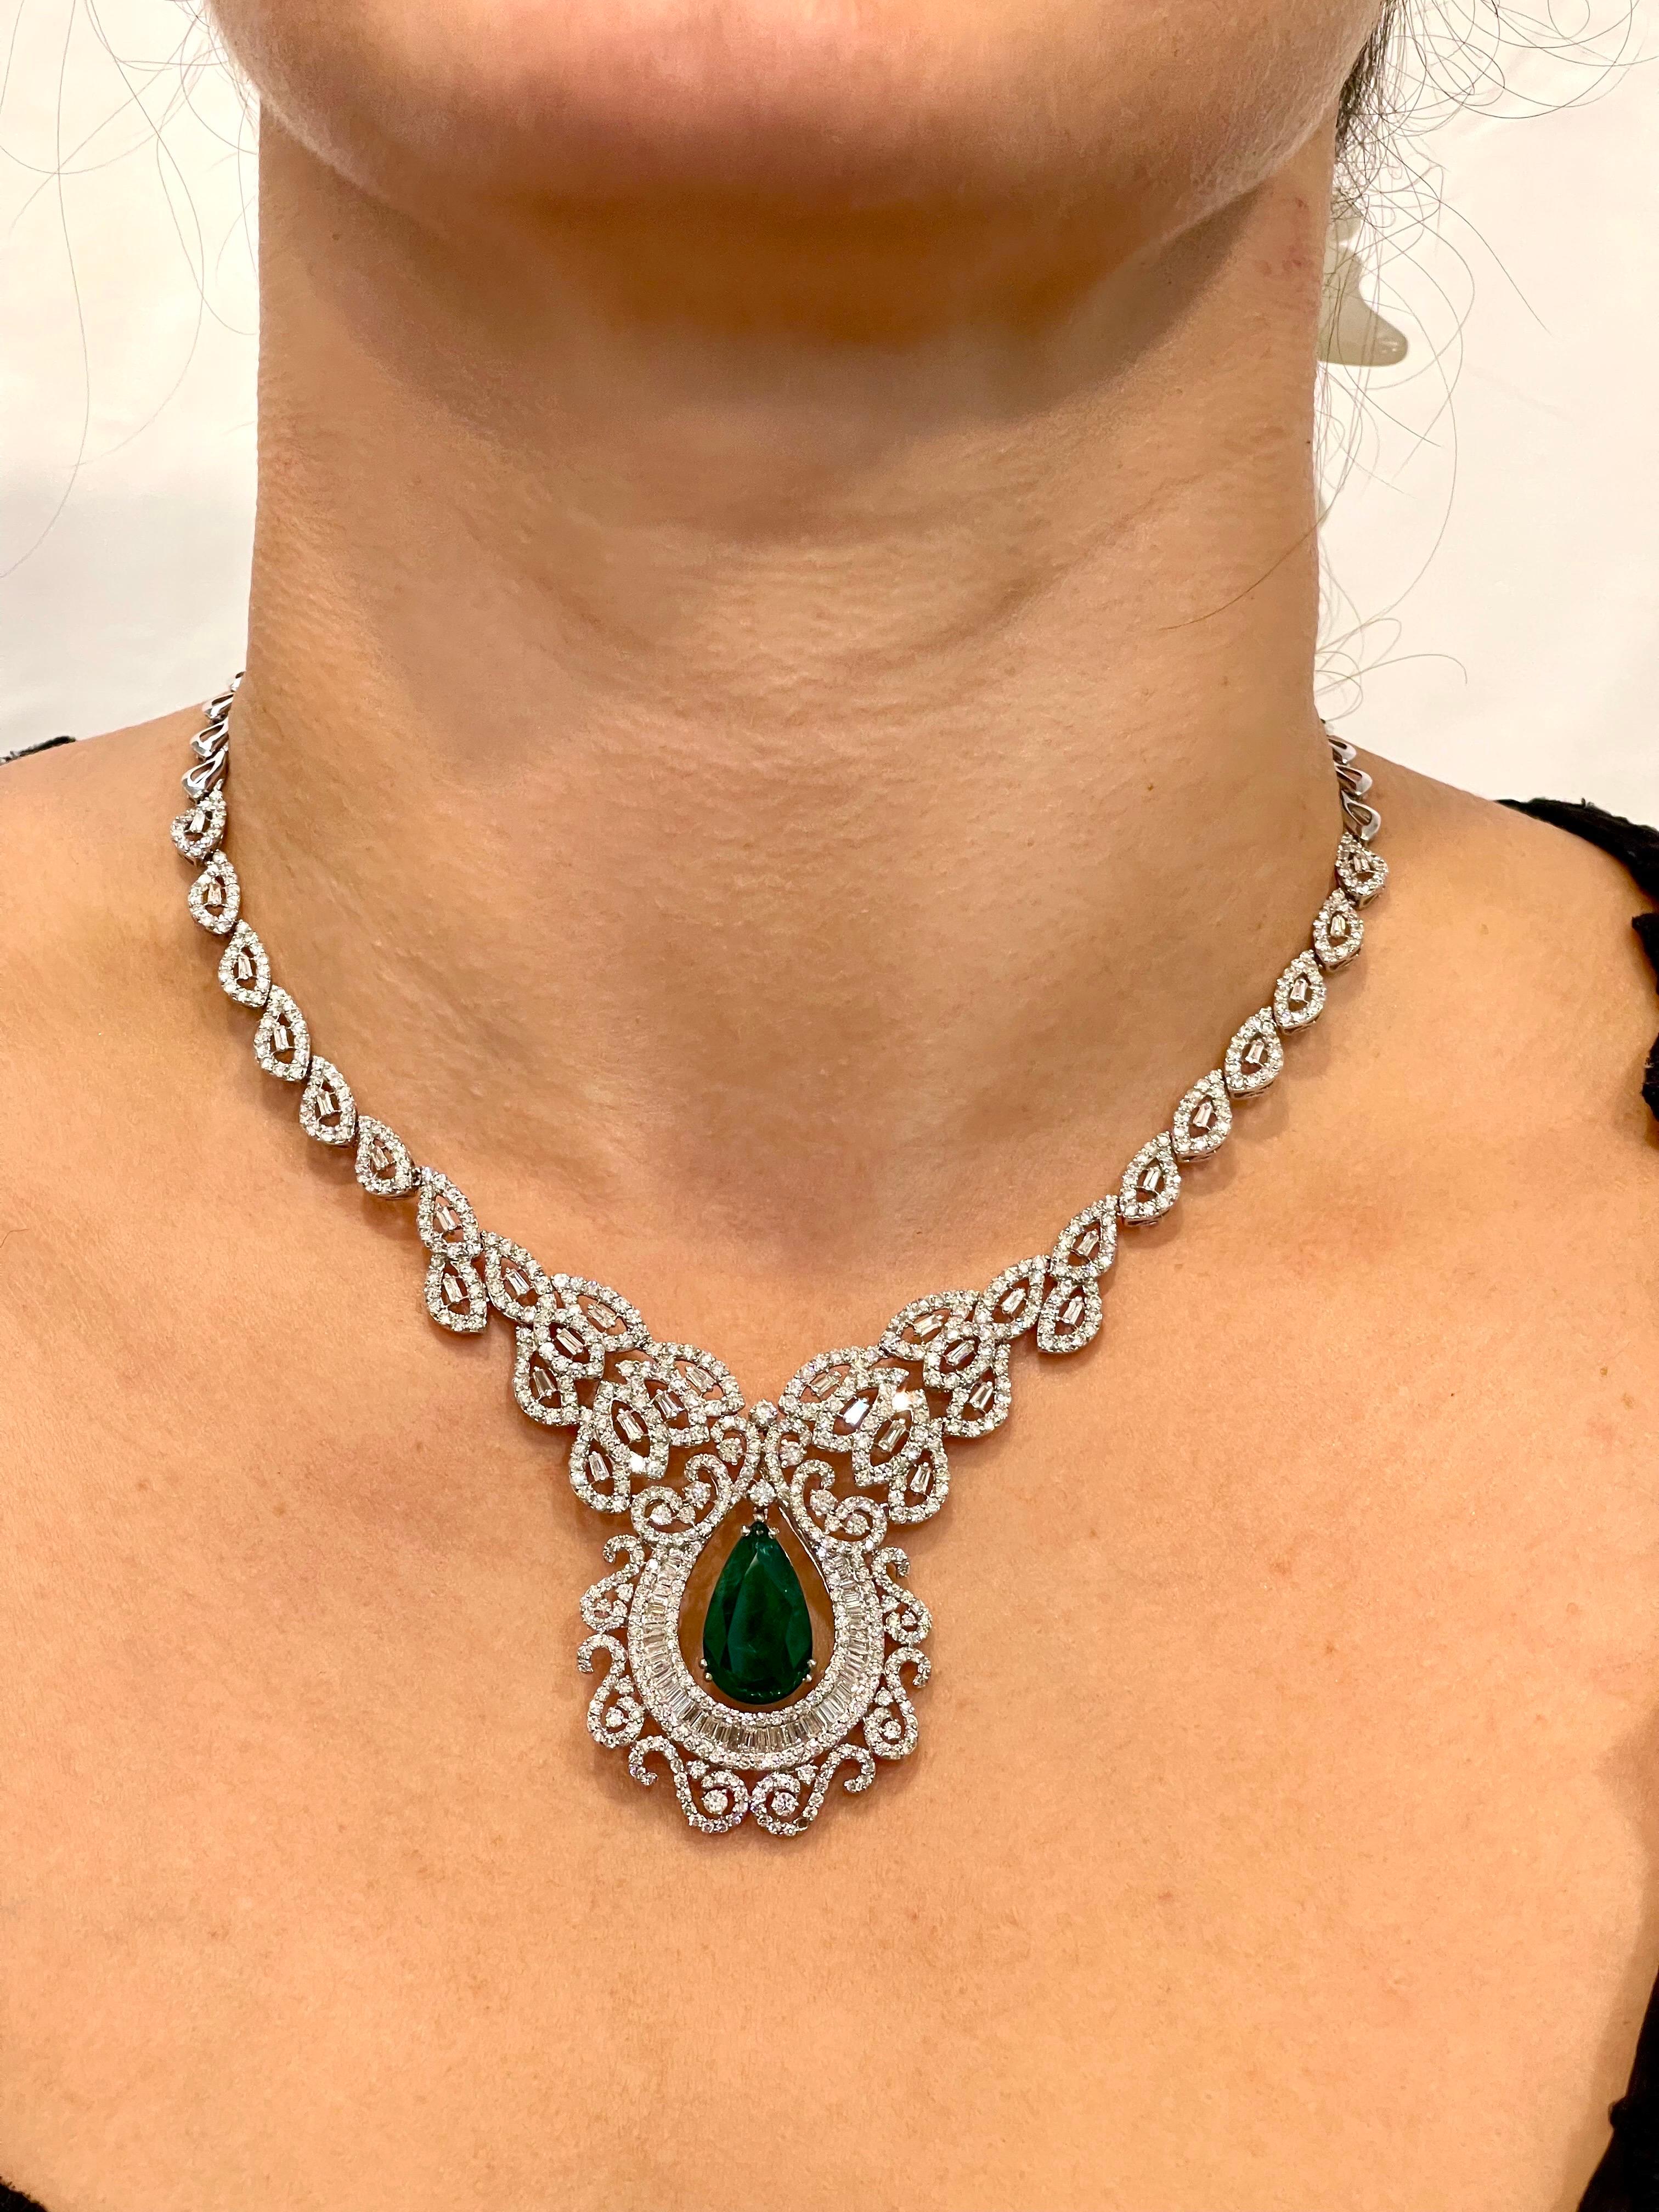 11 Ct Pear Shape Zambian Natural Emerald & 17 Ct Diamond Necklace 18 Karat Gold For Sale 10